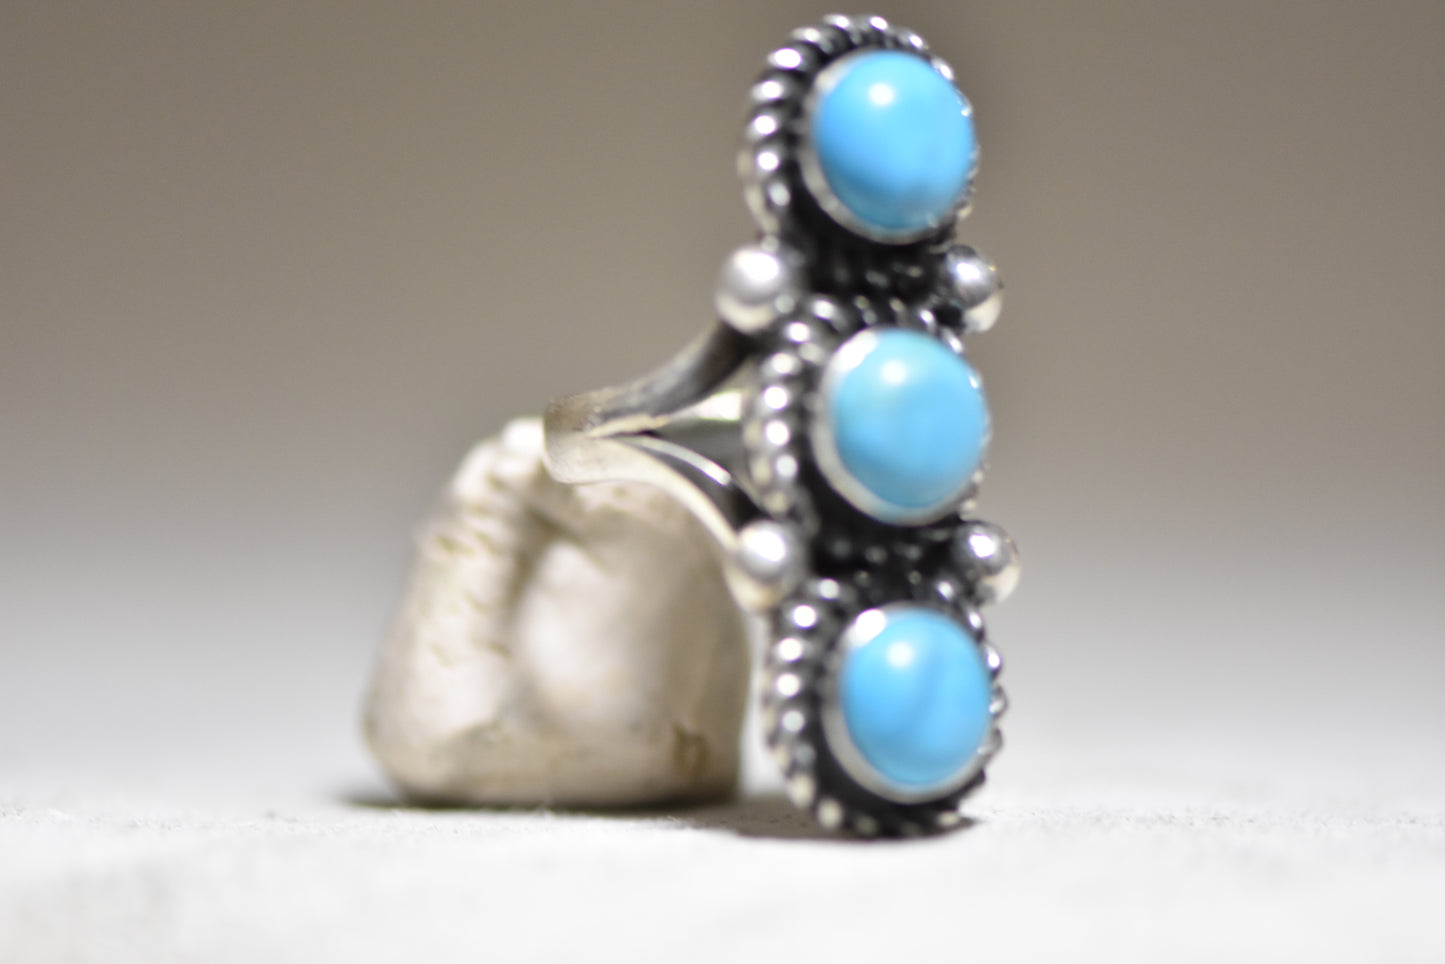 Long Turquoise ring southwest tribal sterling silver women girls